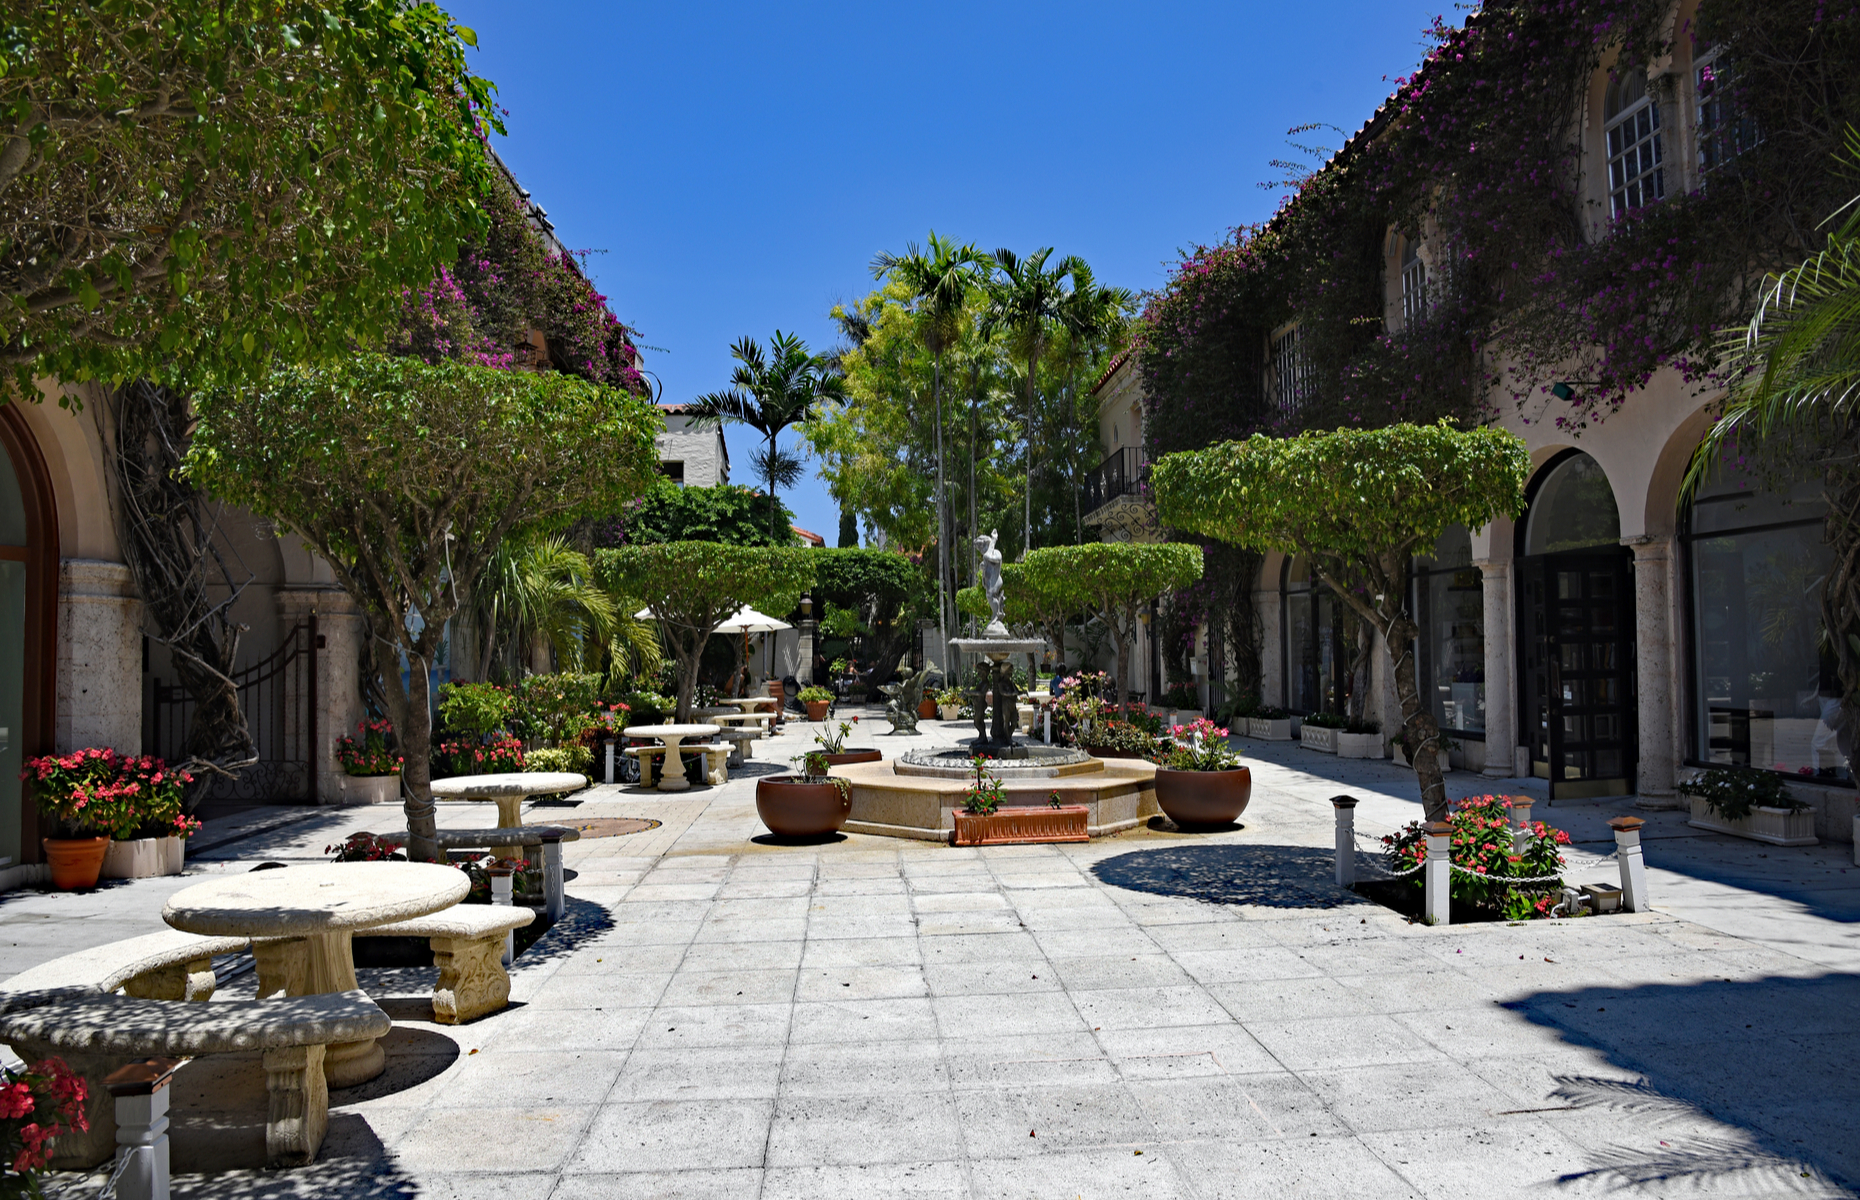 Courtyard near Worth Avenue (Image: Thomas Barrat/Shutterstock)